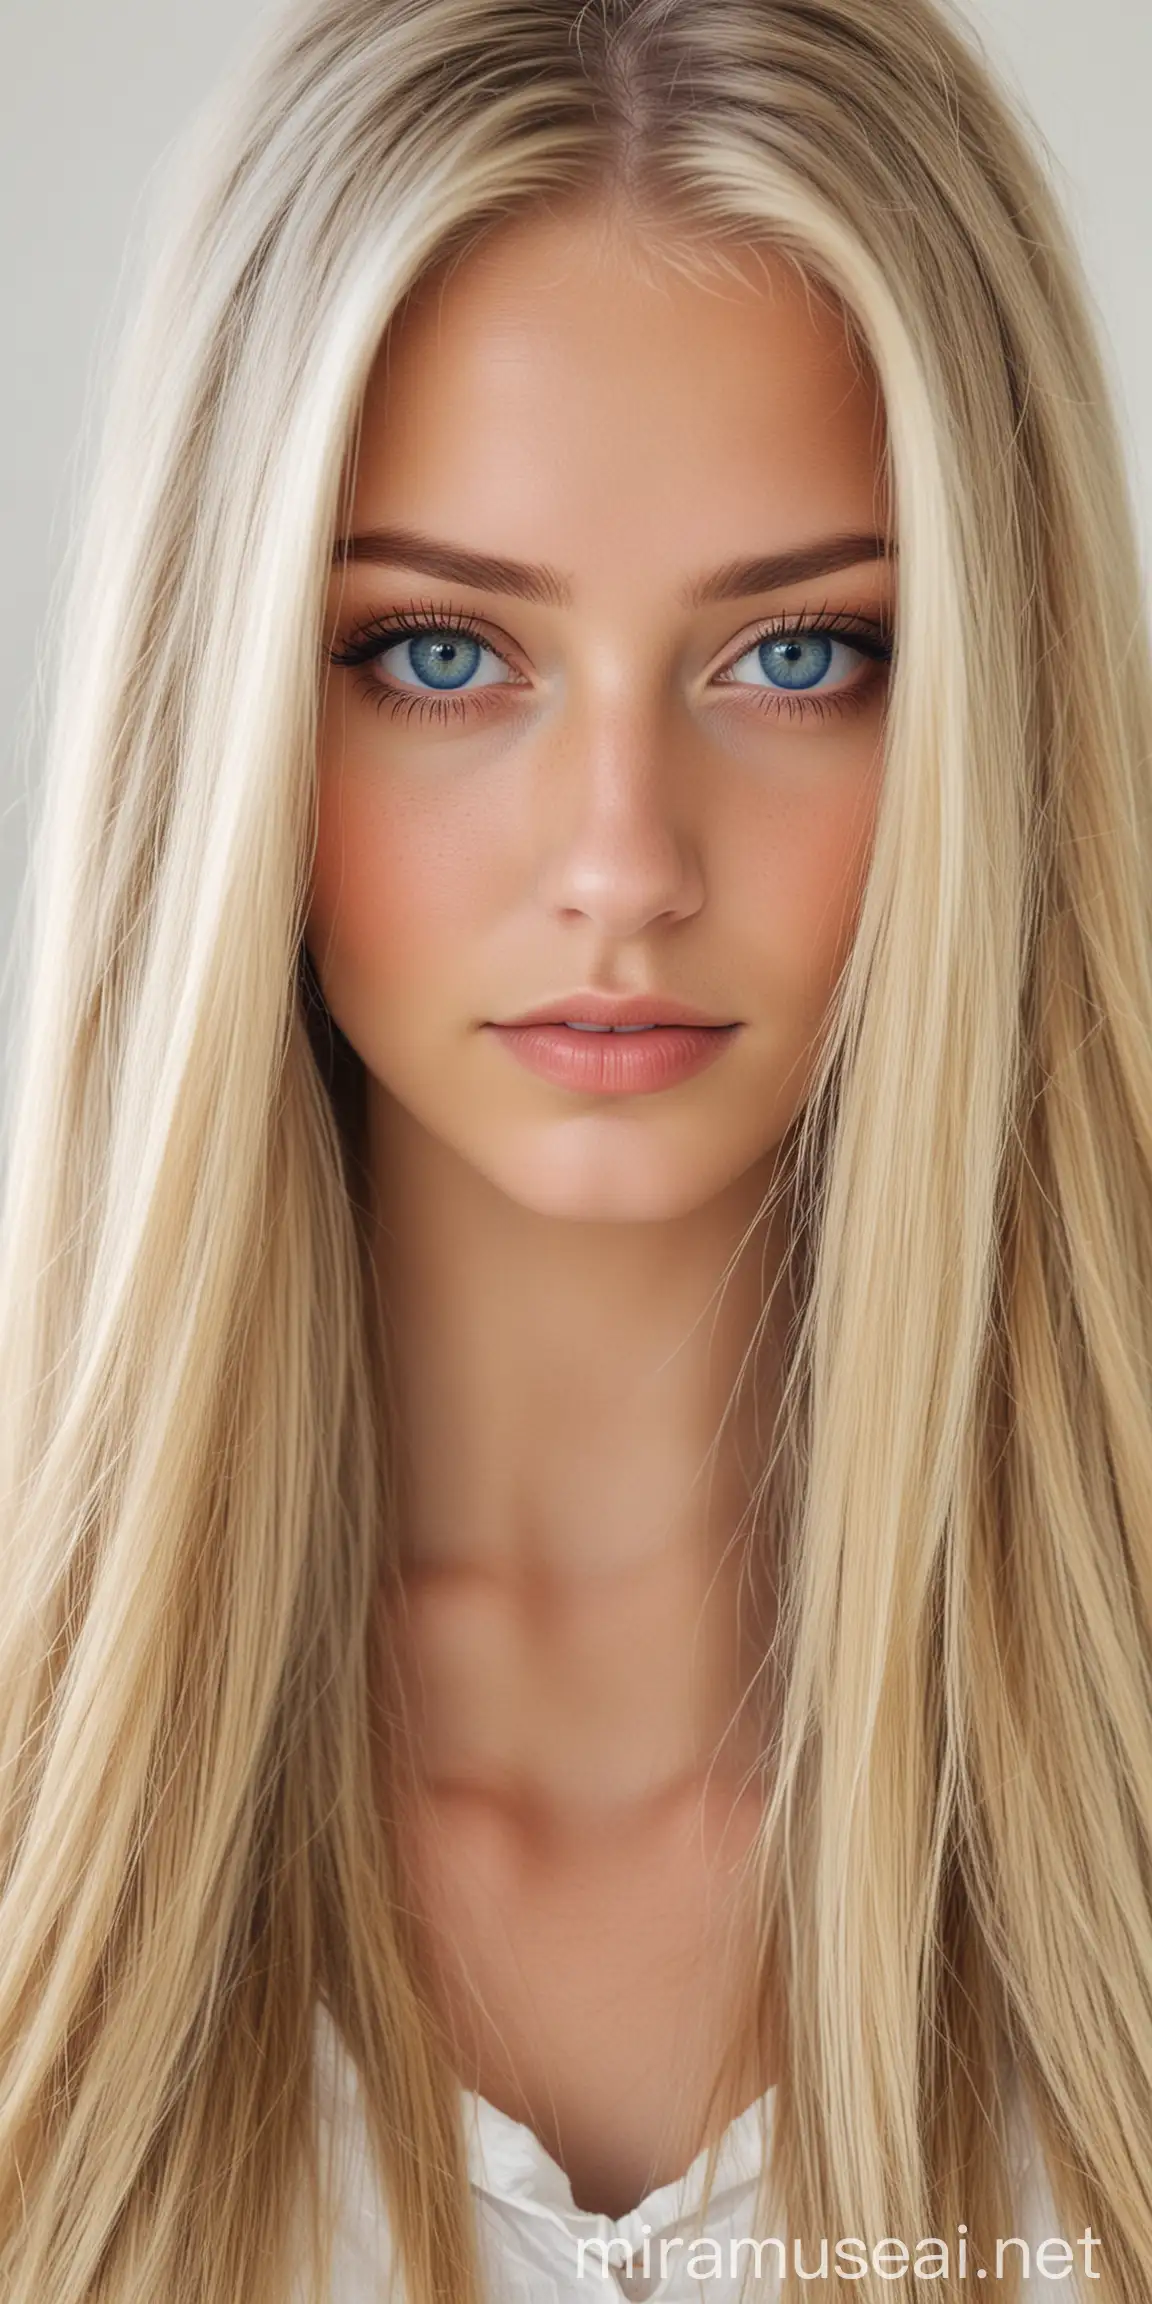 Blonde, blue eyes, long hair, whole head